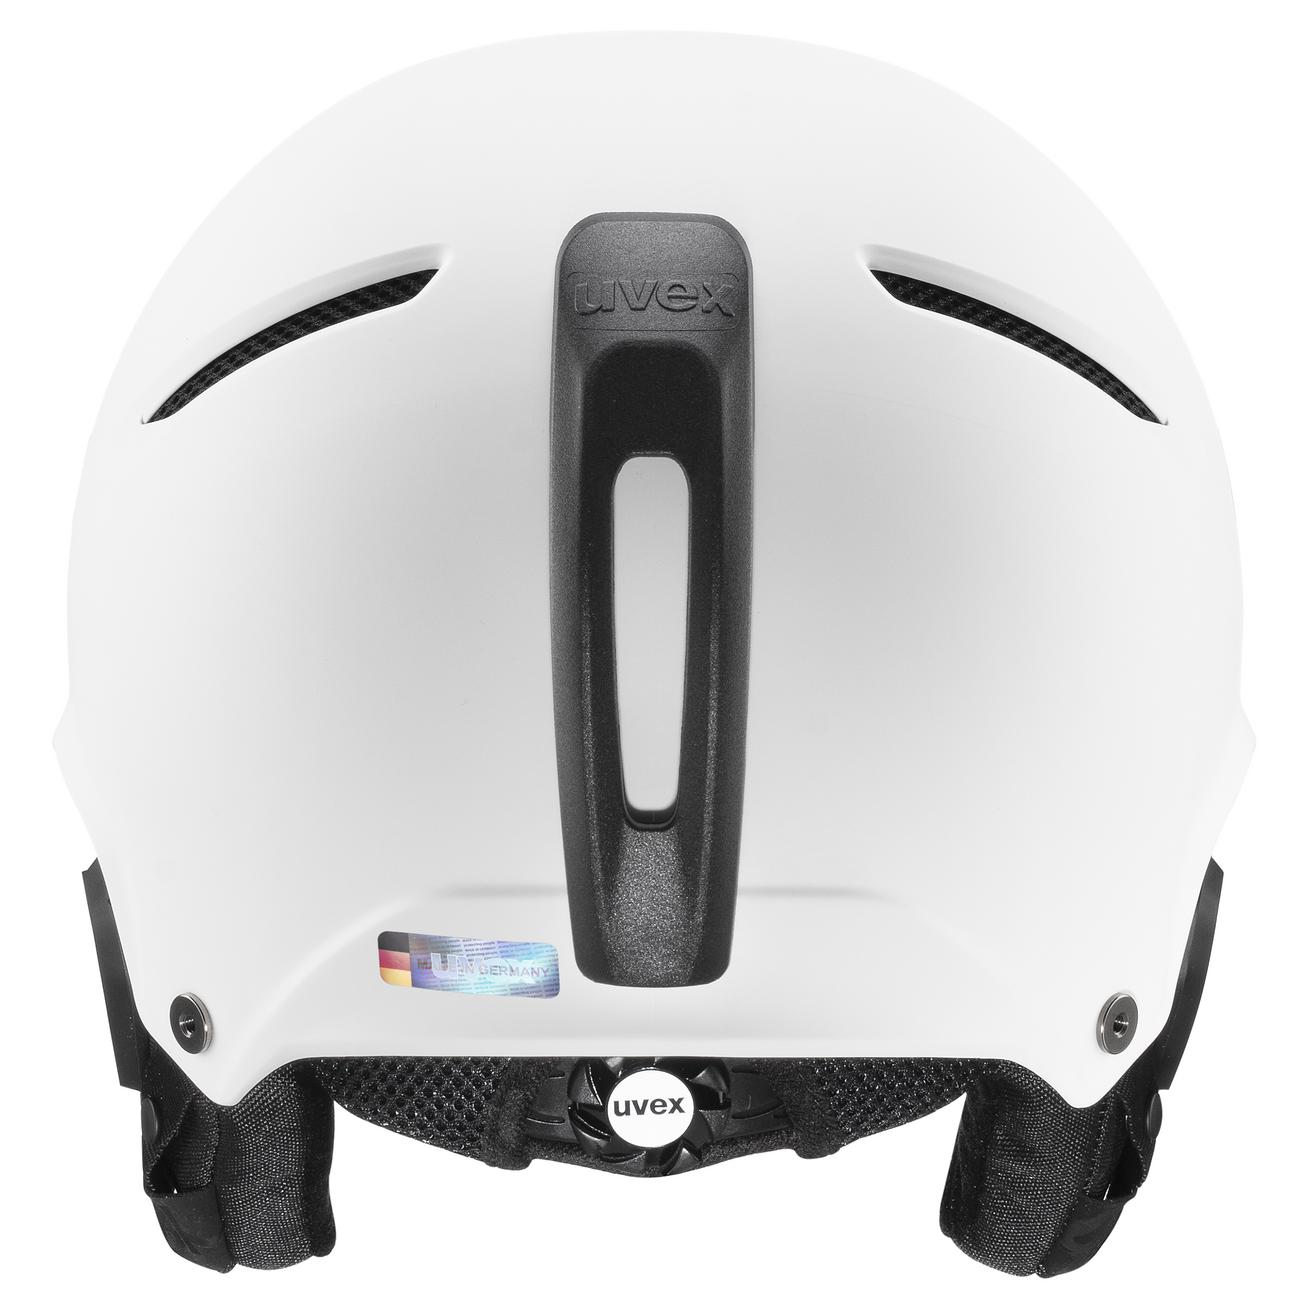 anthrazite mat-White uvex Unisexs Adult 55-59 cm JAKK+ octo+ ski Helmet